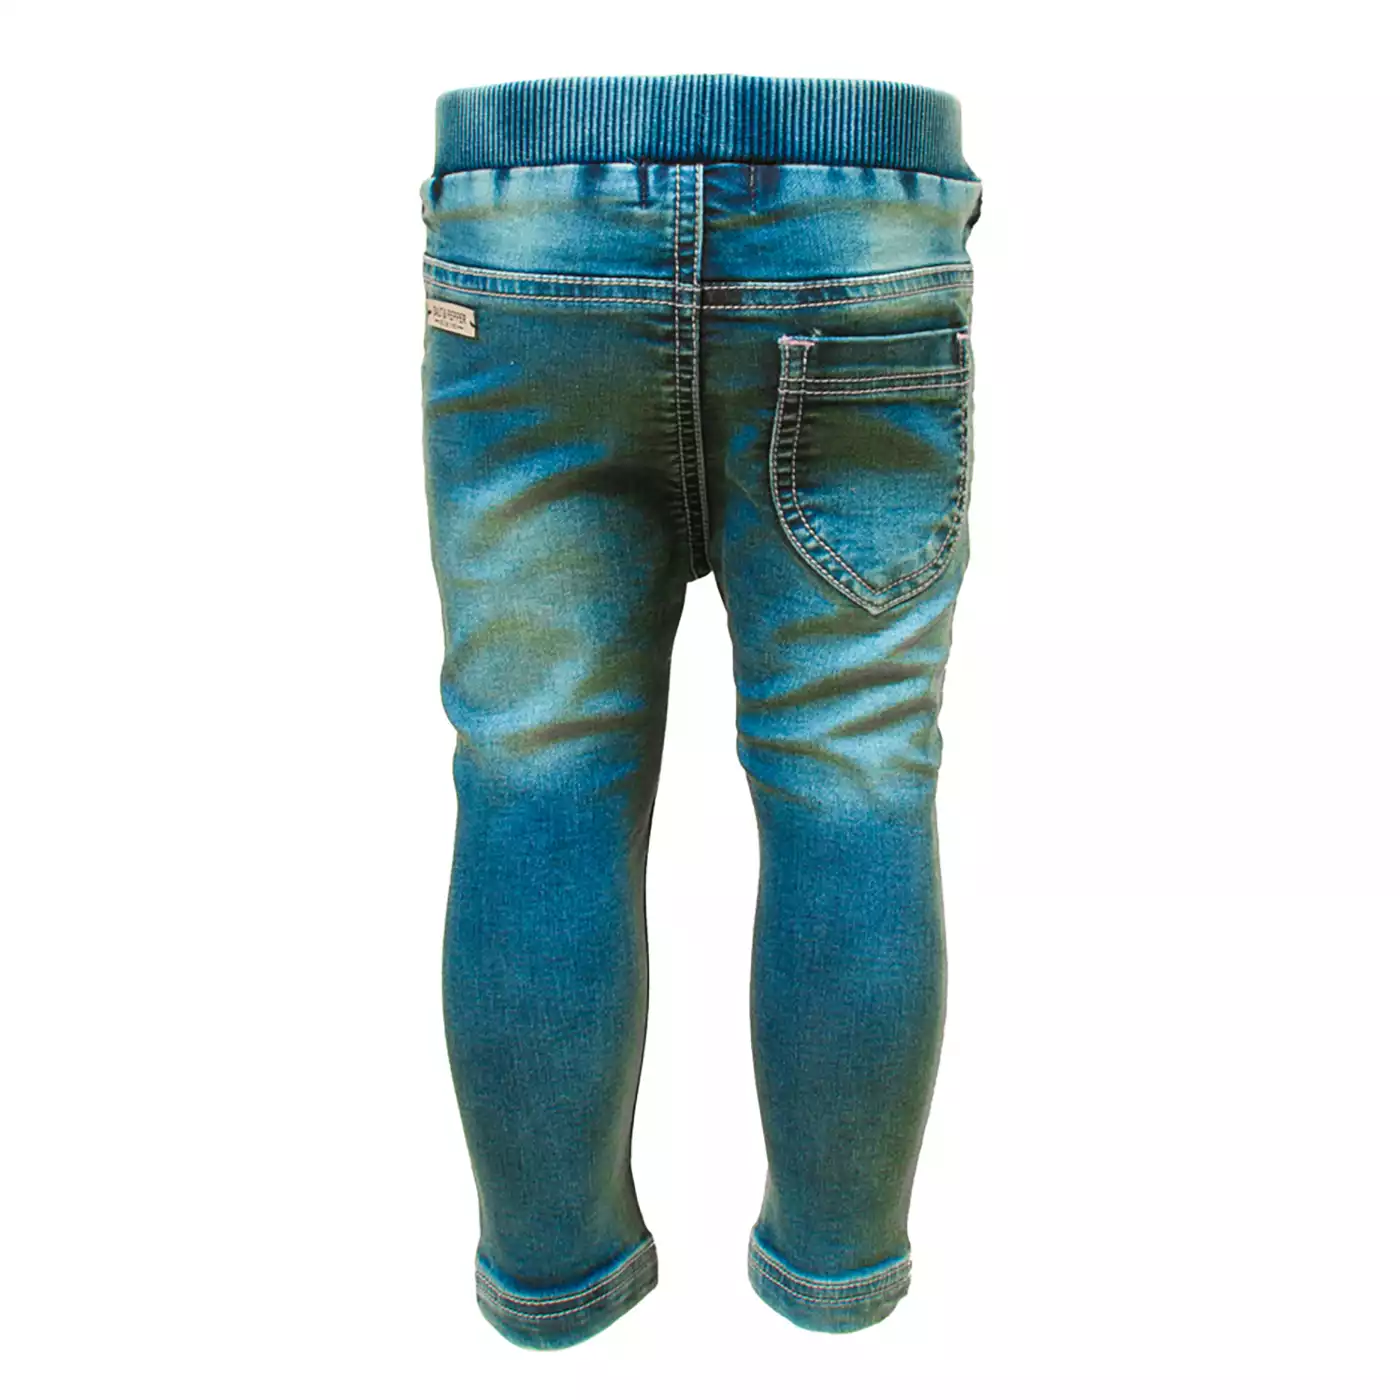 Jeans Seaside Salt & Pepper Mehrfarbig Mehrfarbig Blau M2007580190501 4